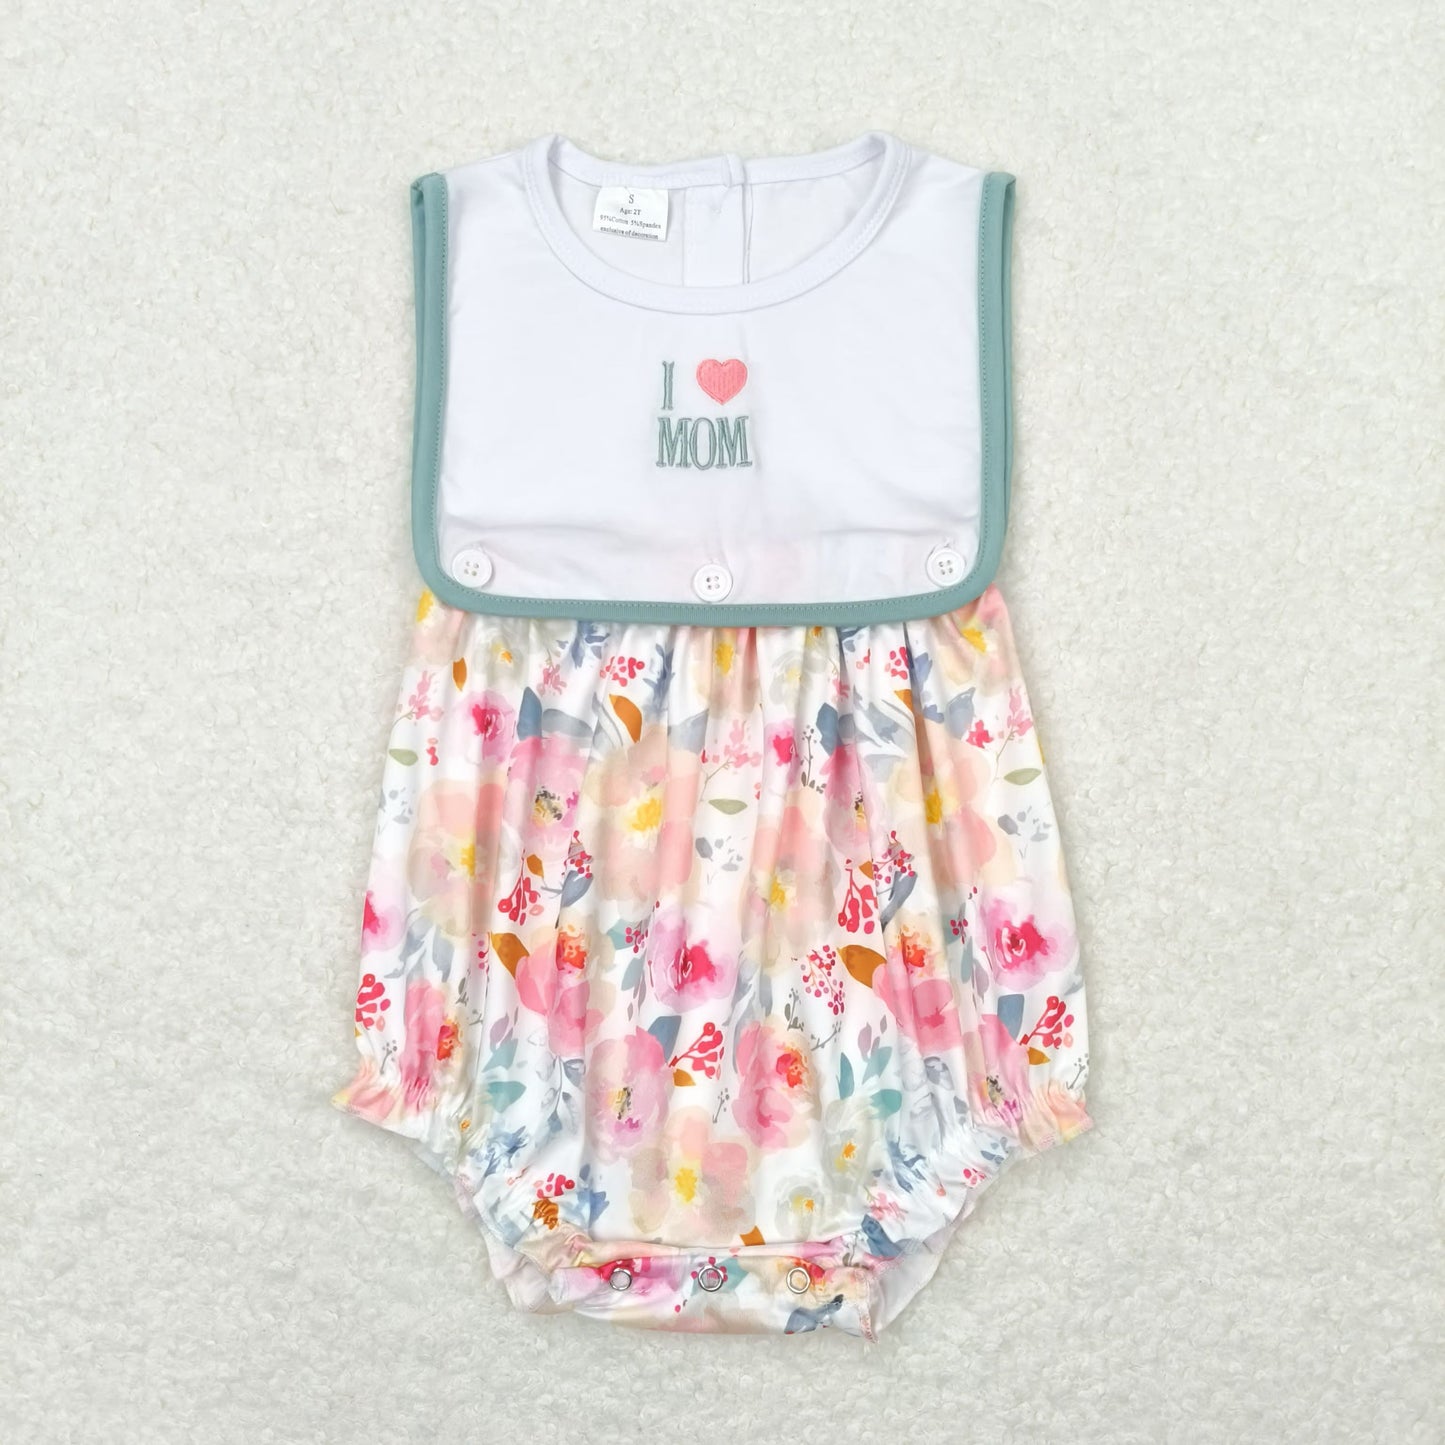 SR0989 I love mom embroidered love flower tank top jumpsuit